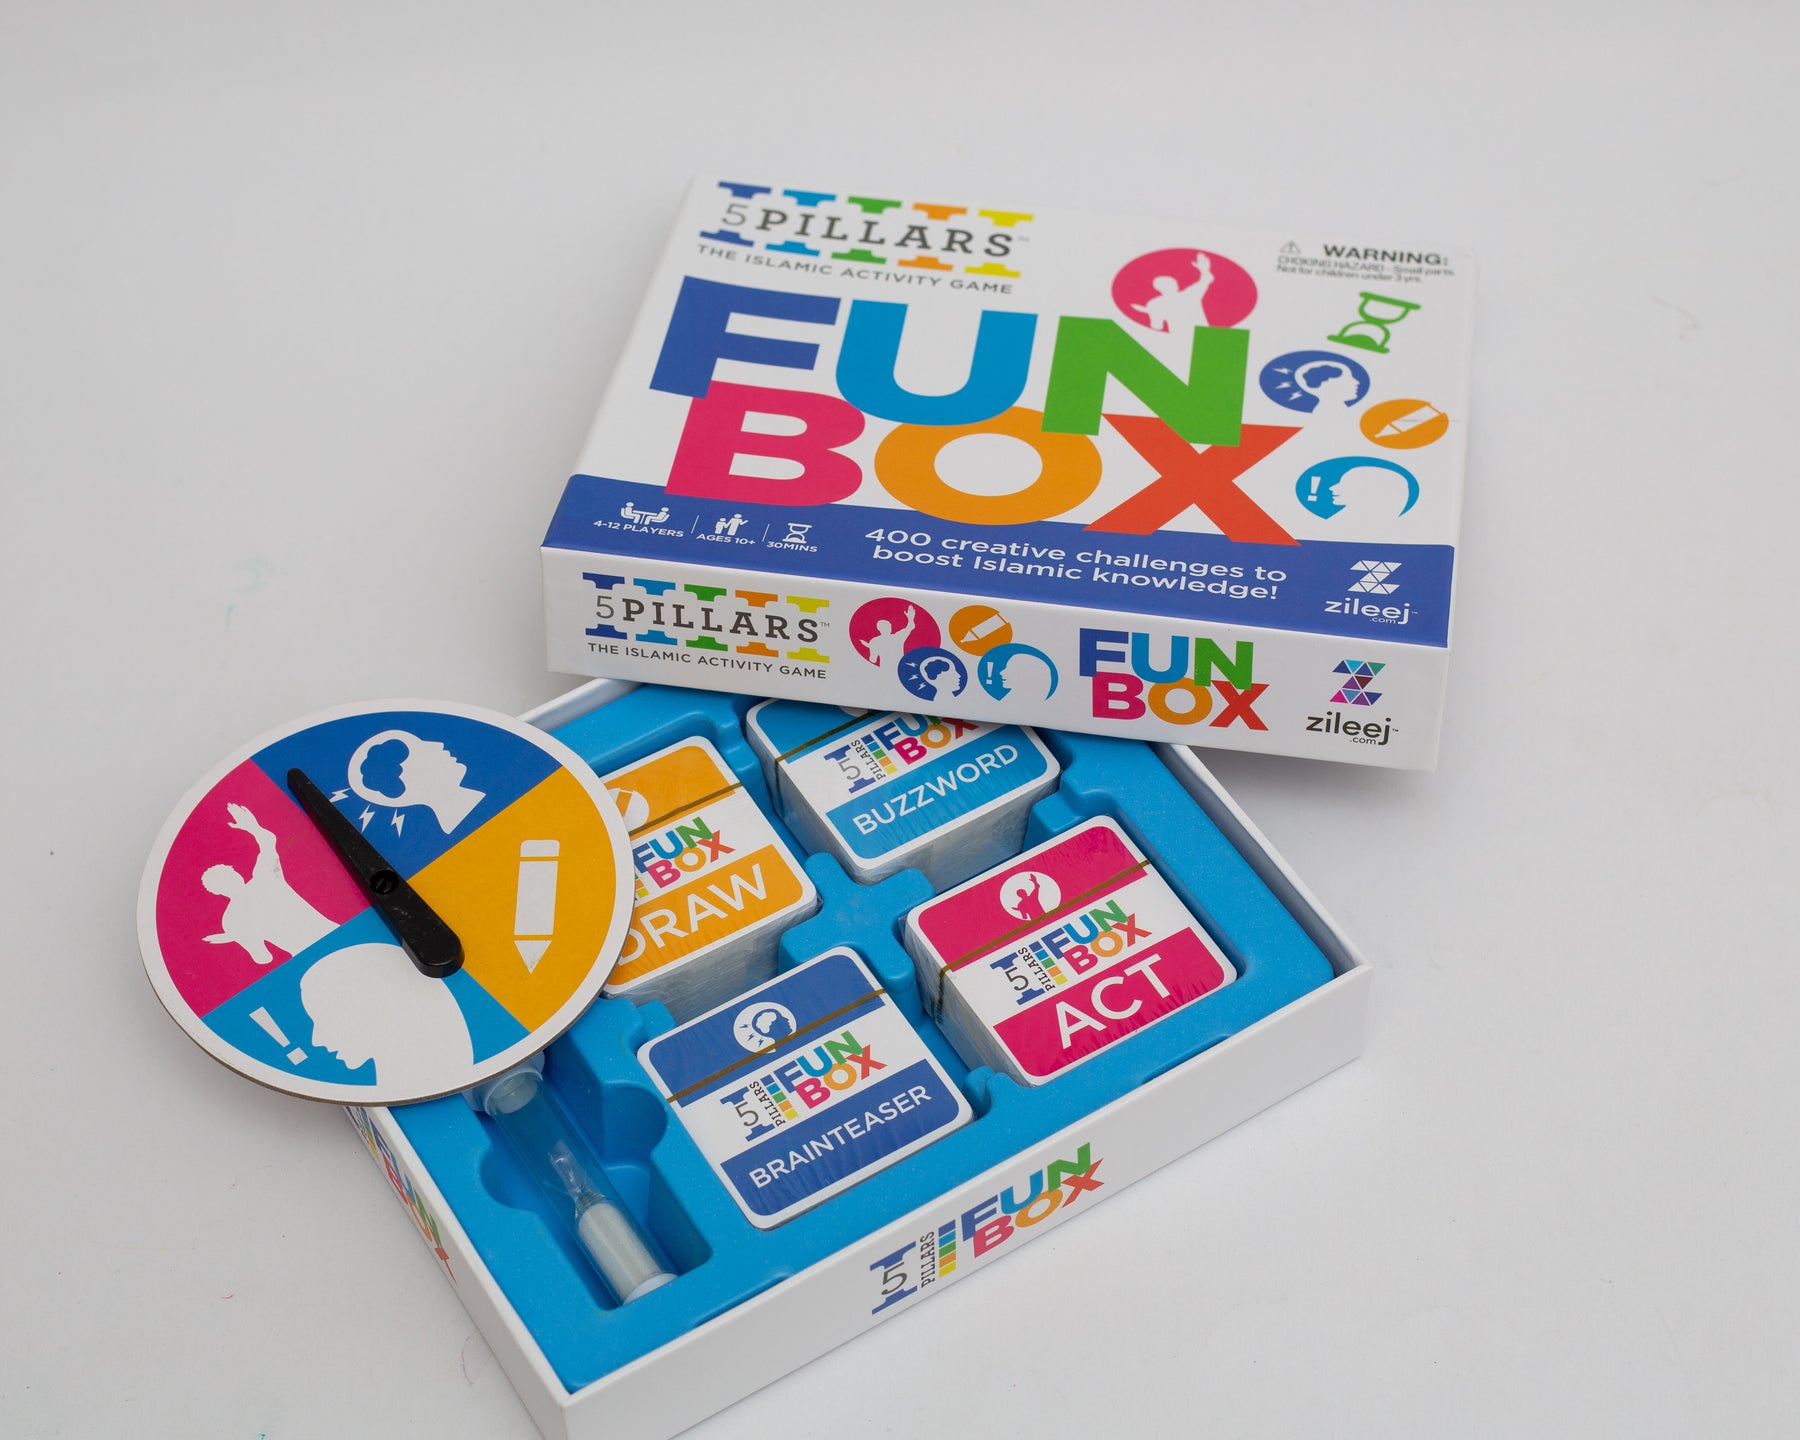 5Pillars: Fun Box - The Islamic Activity Game